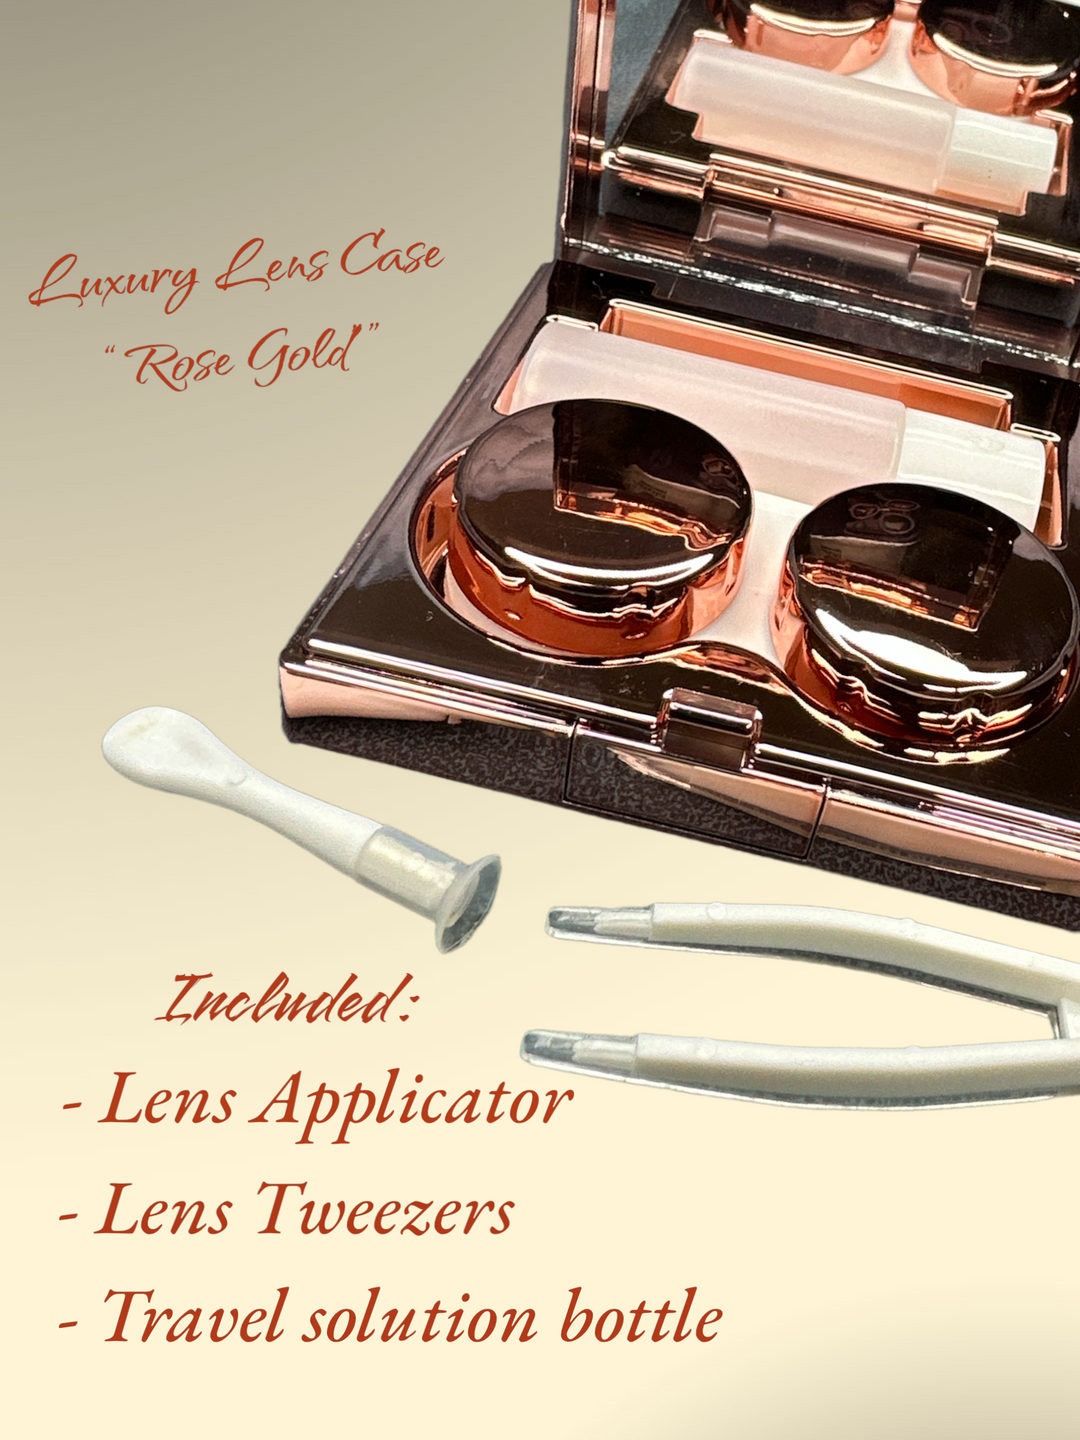 Luxury Lens Case “Rose Gold”